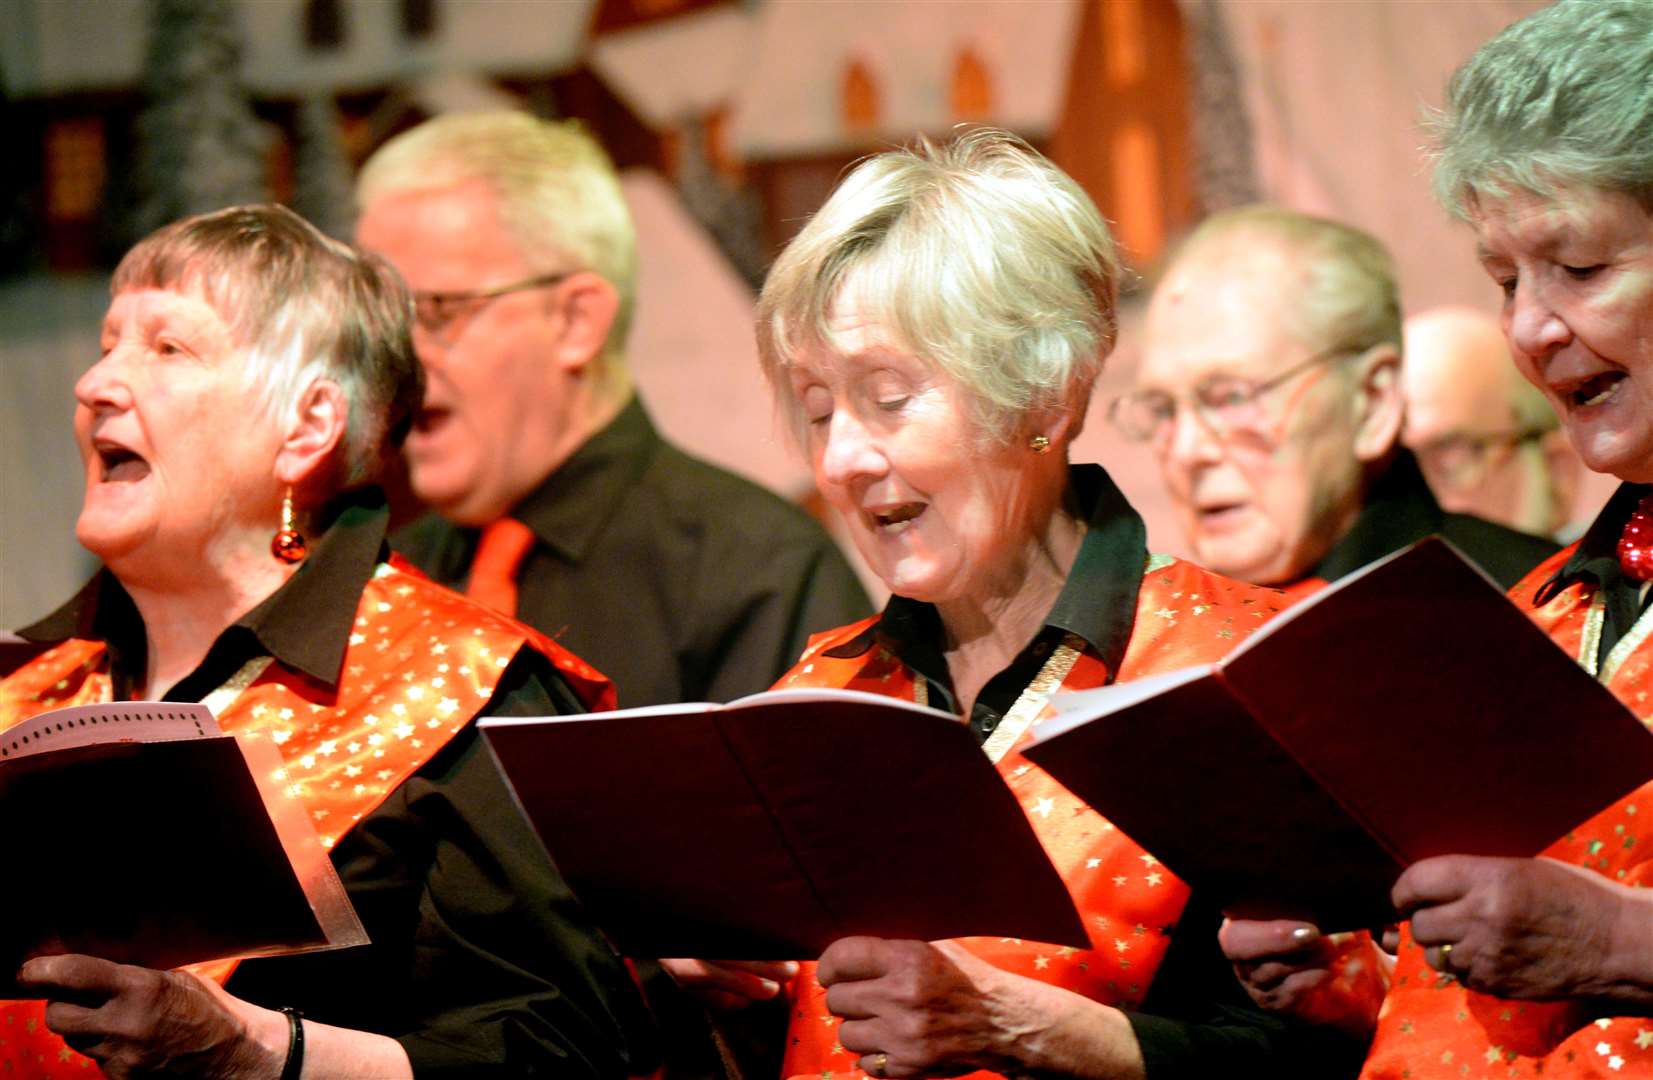 Singing For Pleasure members present their popular Christmas concert.